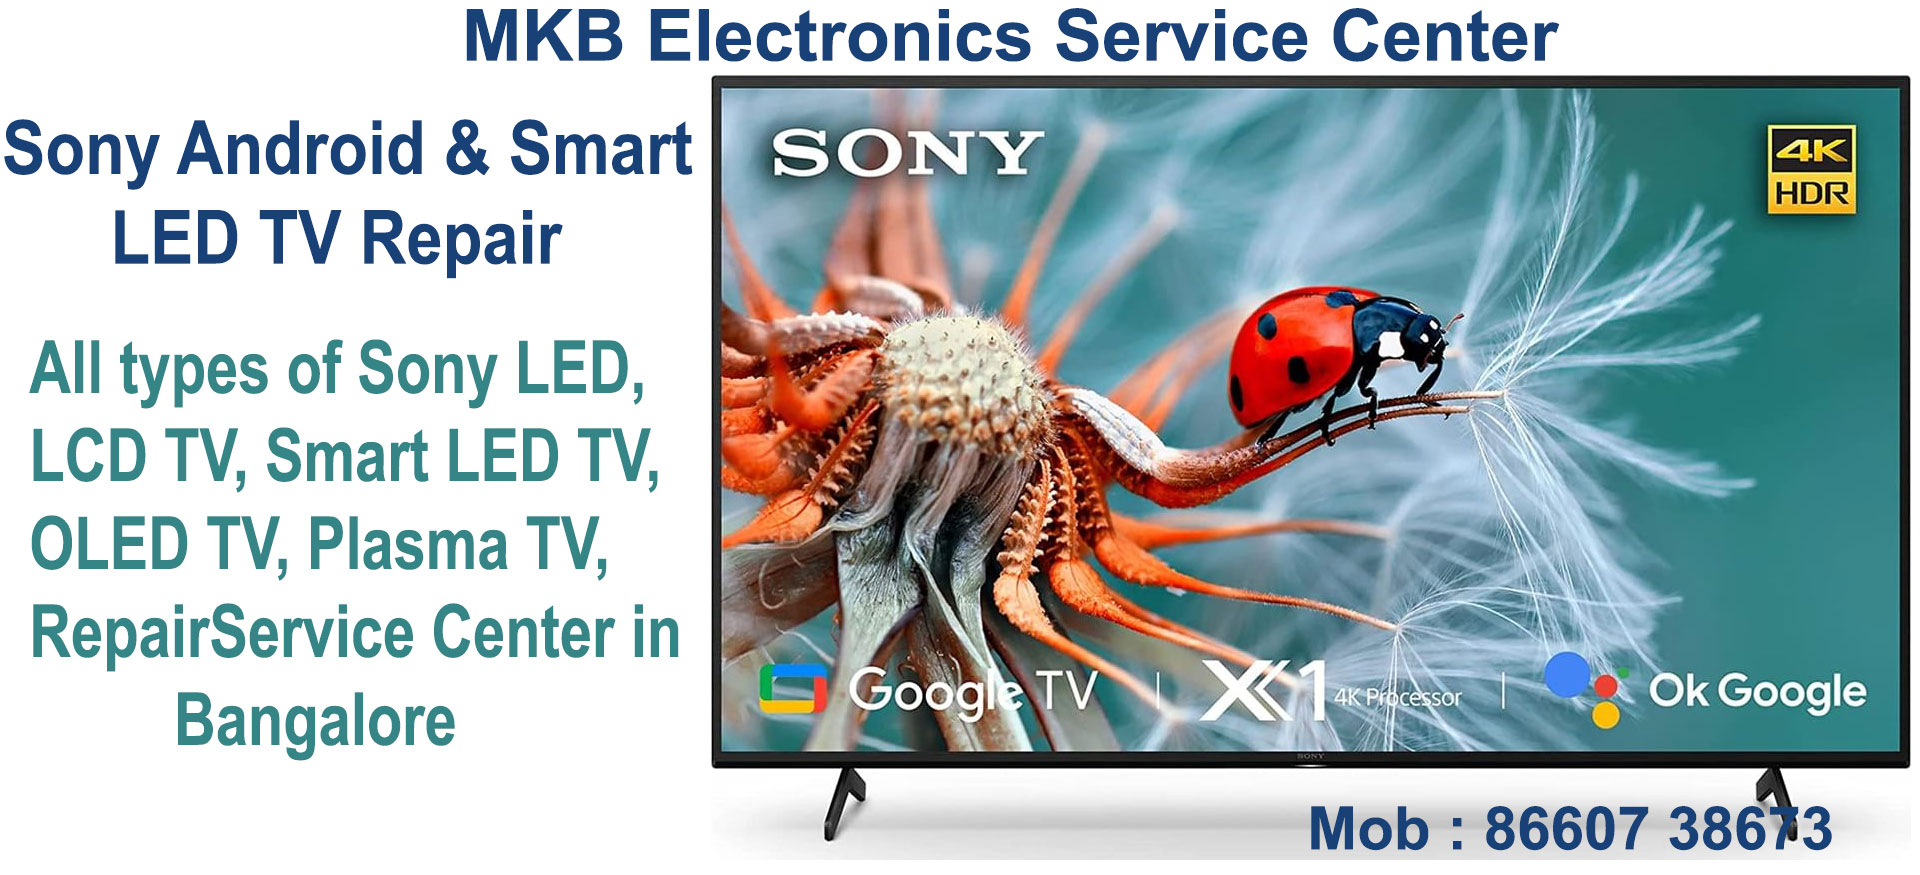 MKB Electronics Service